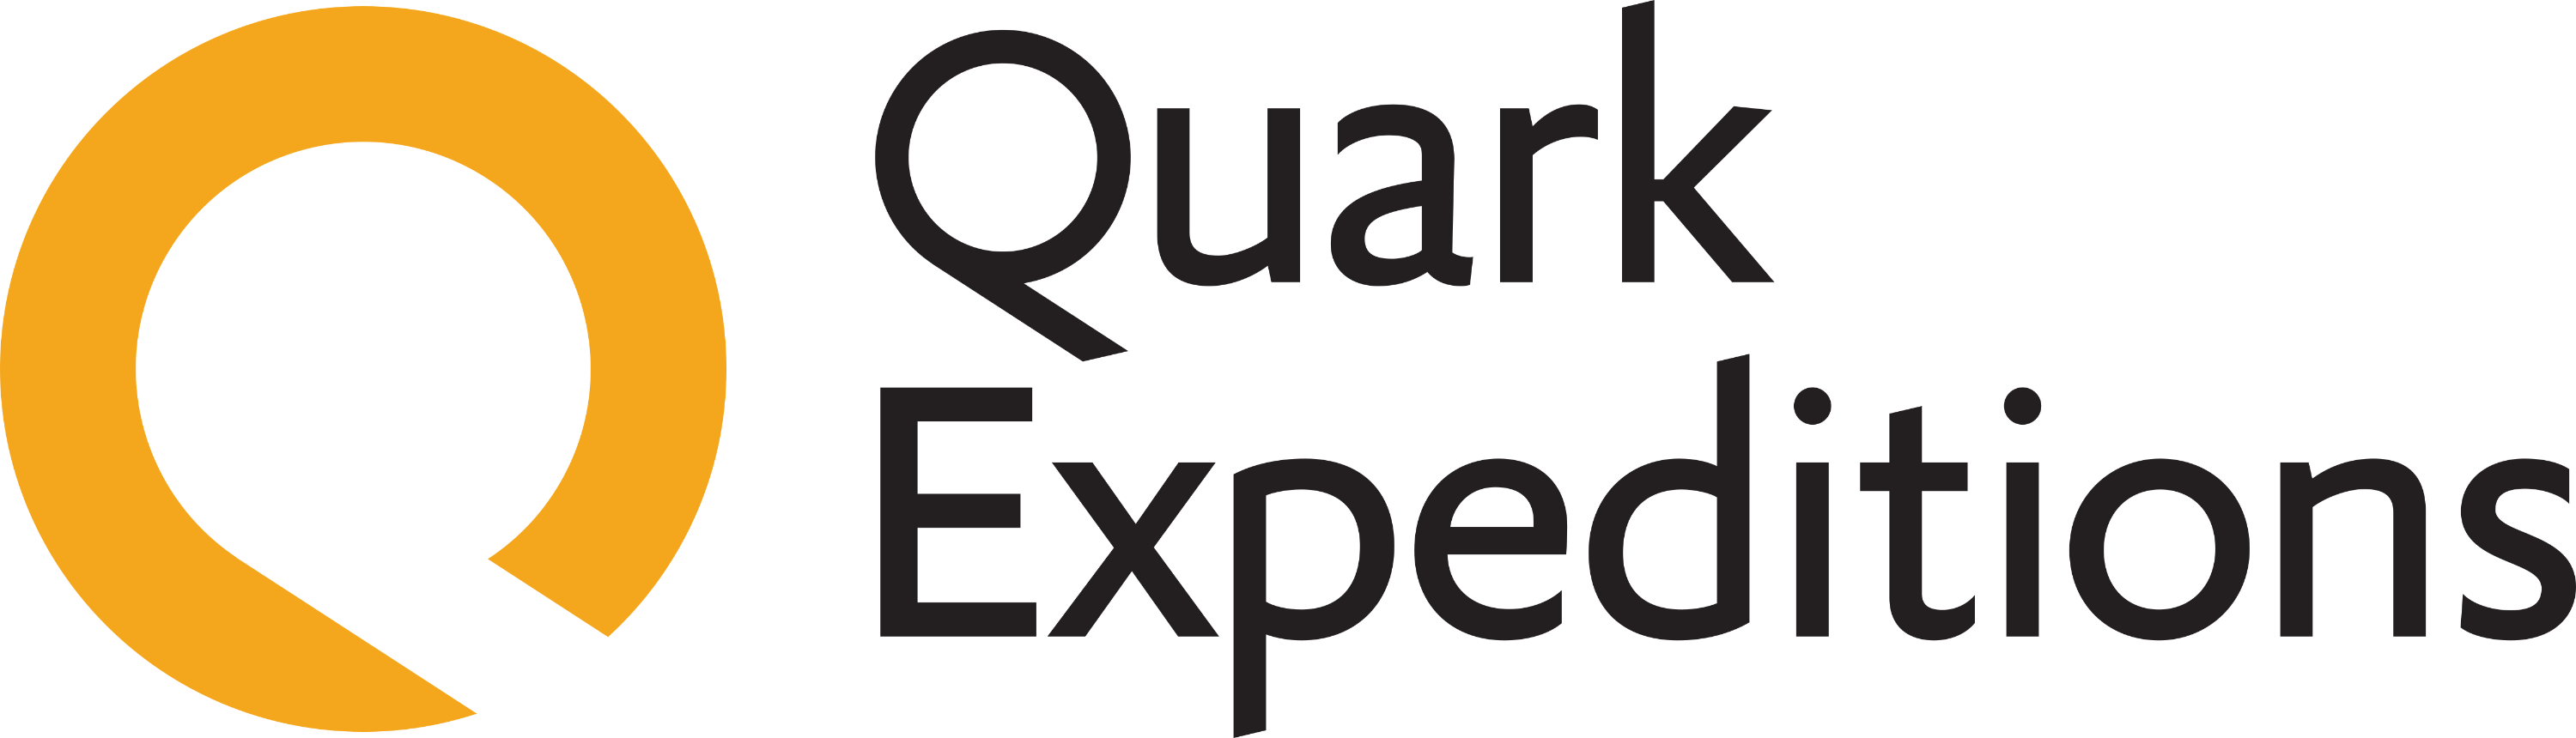 Quark Expeditions Logo croisière antarctique